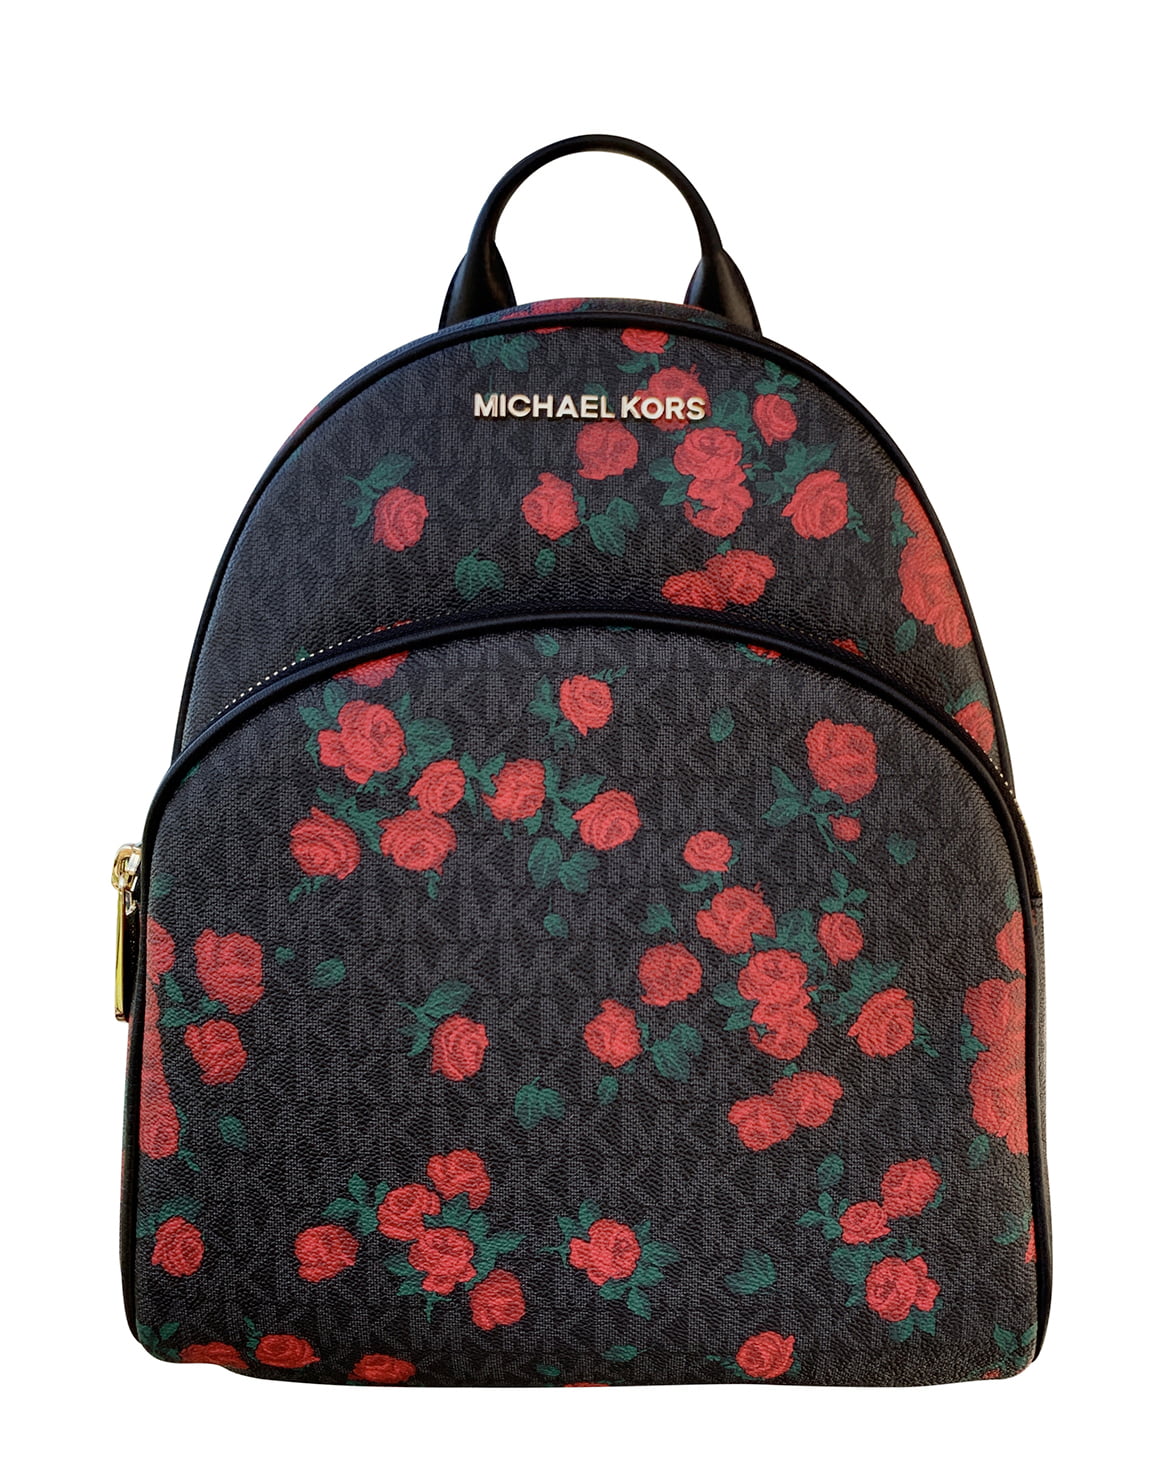 rose michael kors backpack